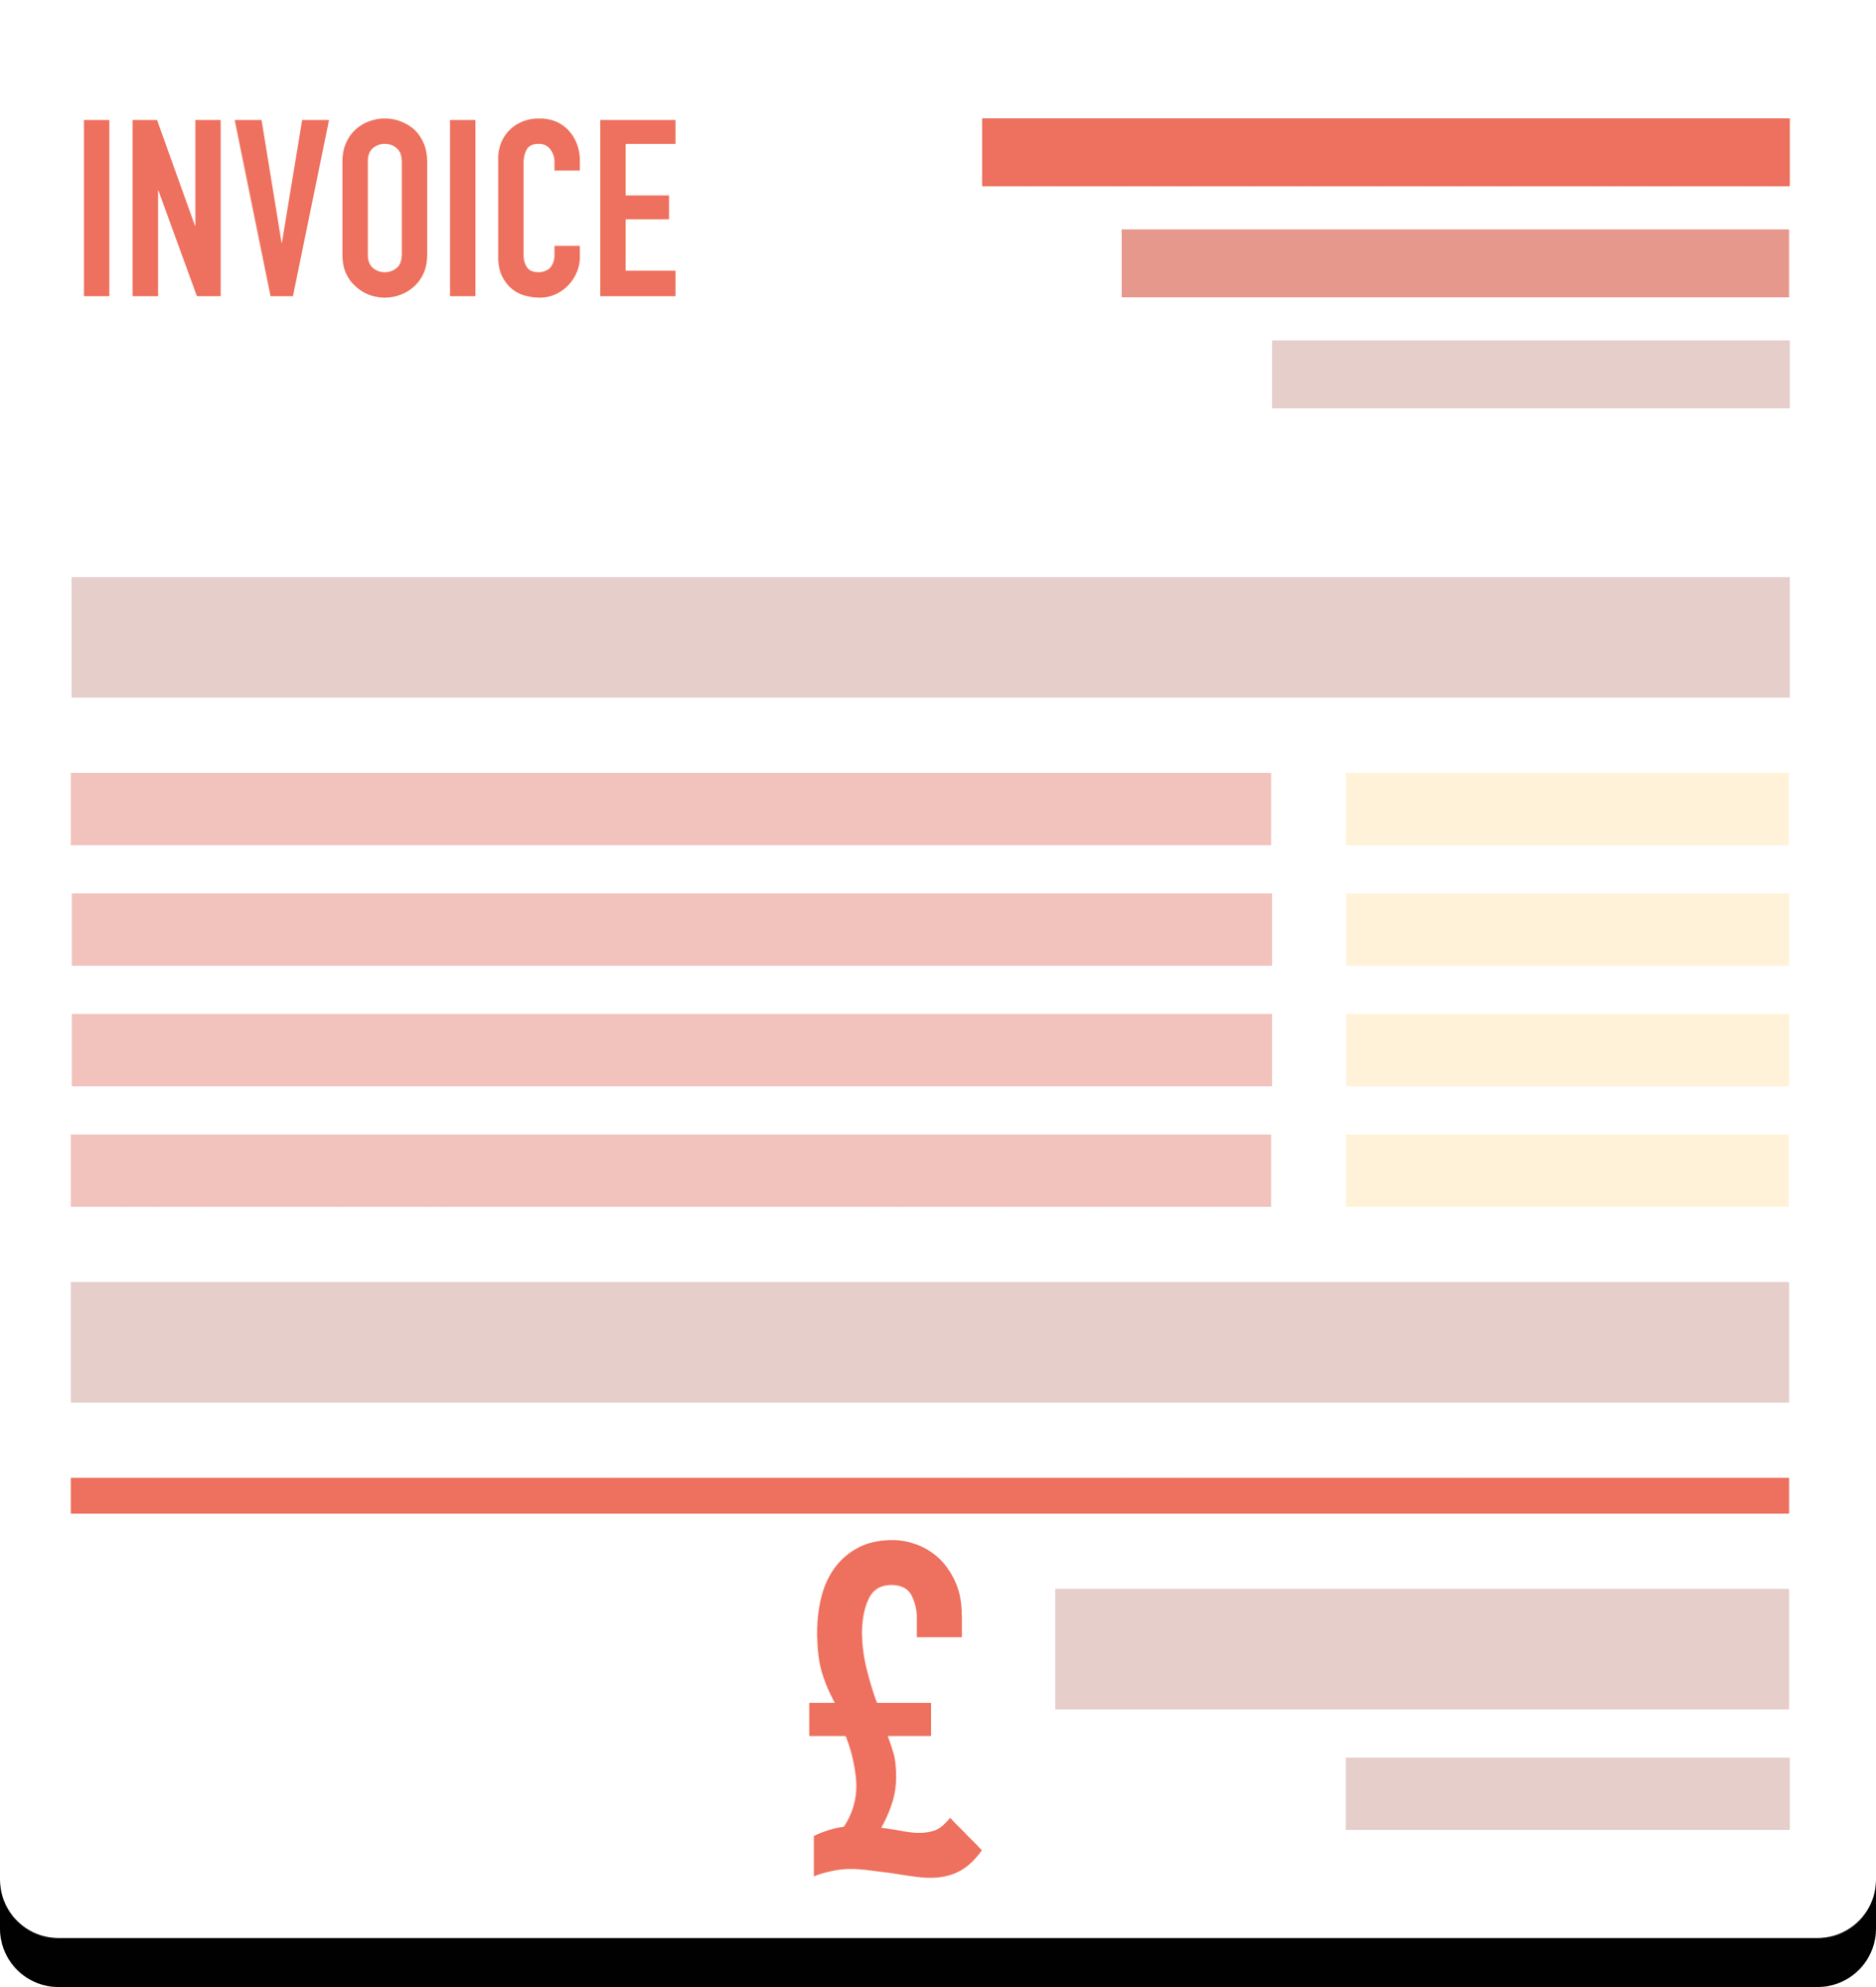 Invoice template for window glazing company